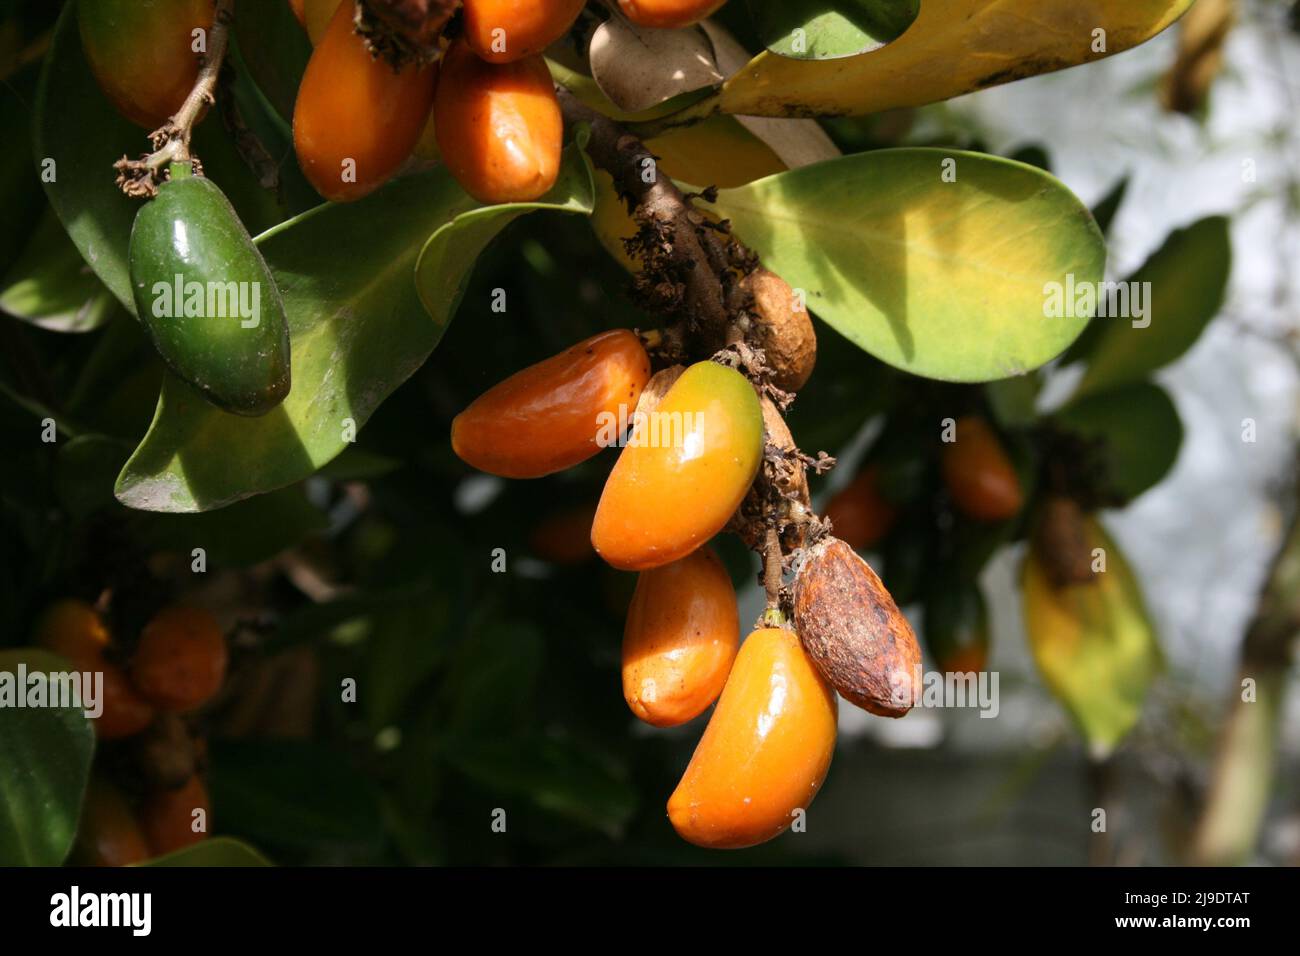 FRUIT ON THE CORYNOCARPUS TREE COMMONLY KNOWN AS KARAKA OR NEW ZEALAND LAUREL Stock Photo